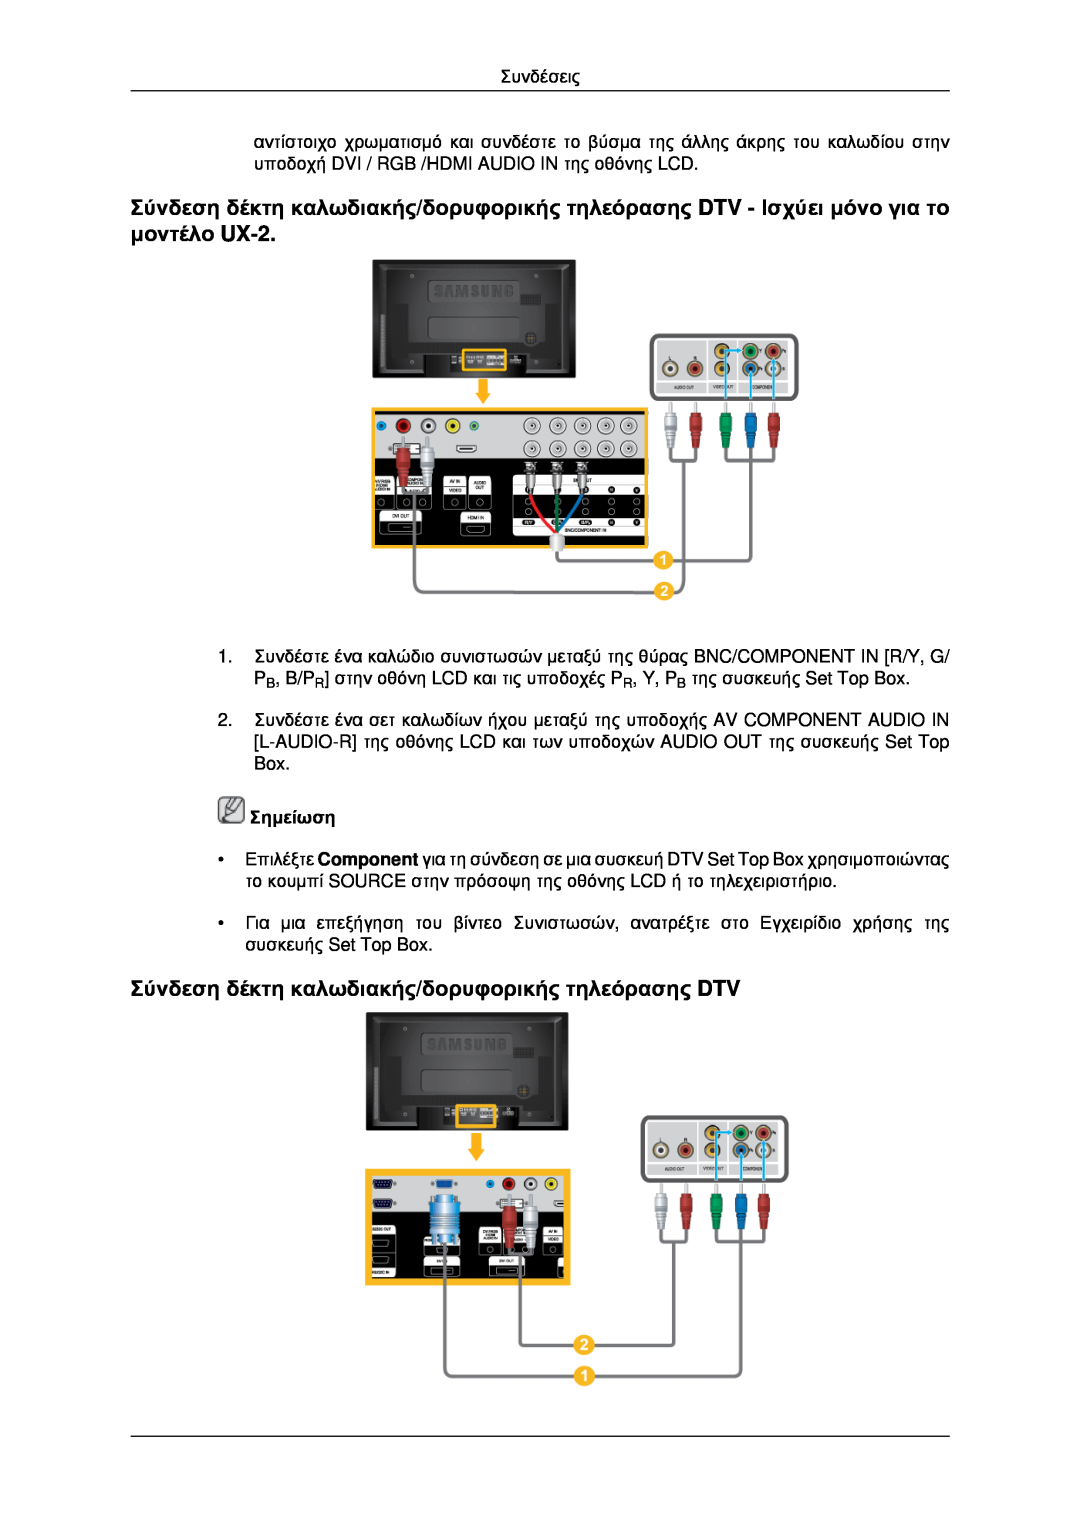 Samsung LH46MSTLBB/EN, LH46MRPLBF/EN, LH40MRTLBC/EN manual Σύνδεση δέκτη καλωδιακής/δορυφορικής τηλεόρασης DTV, Σημείωση 